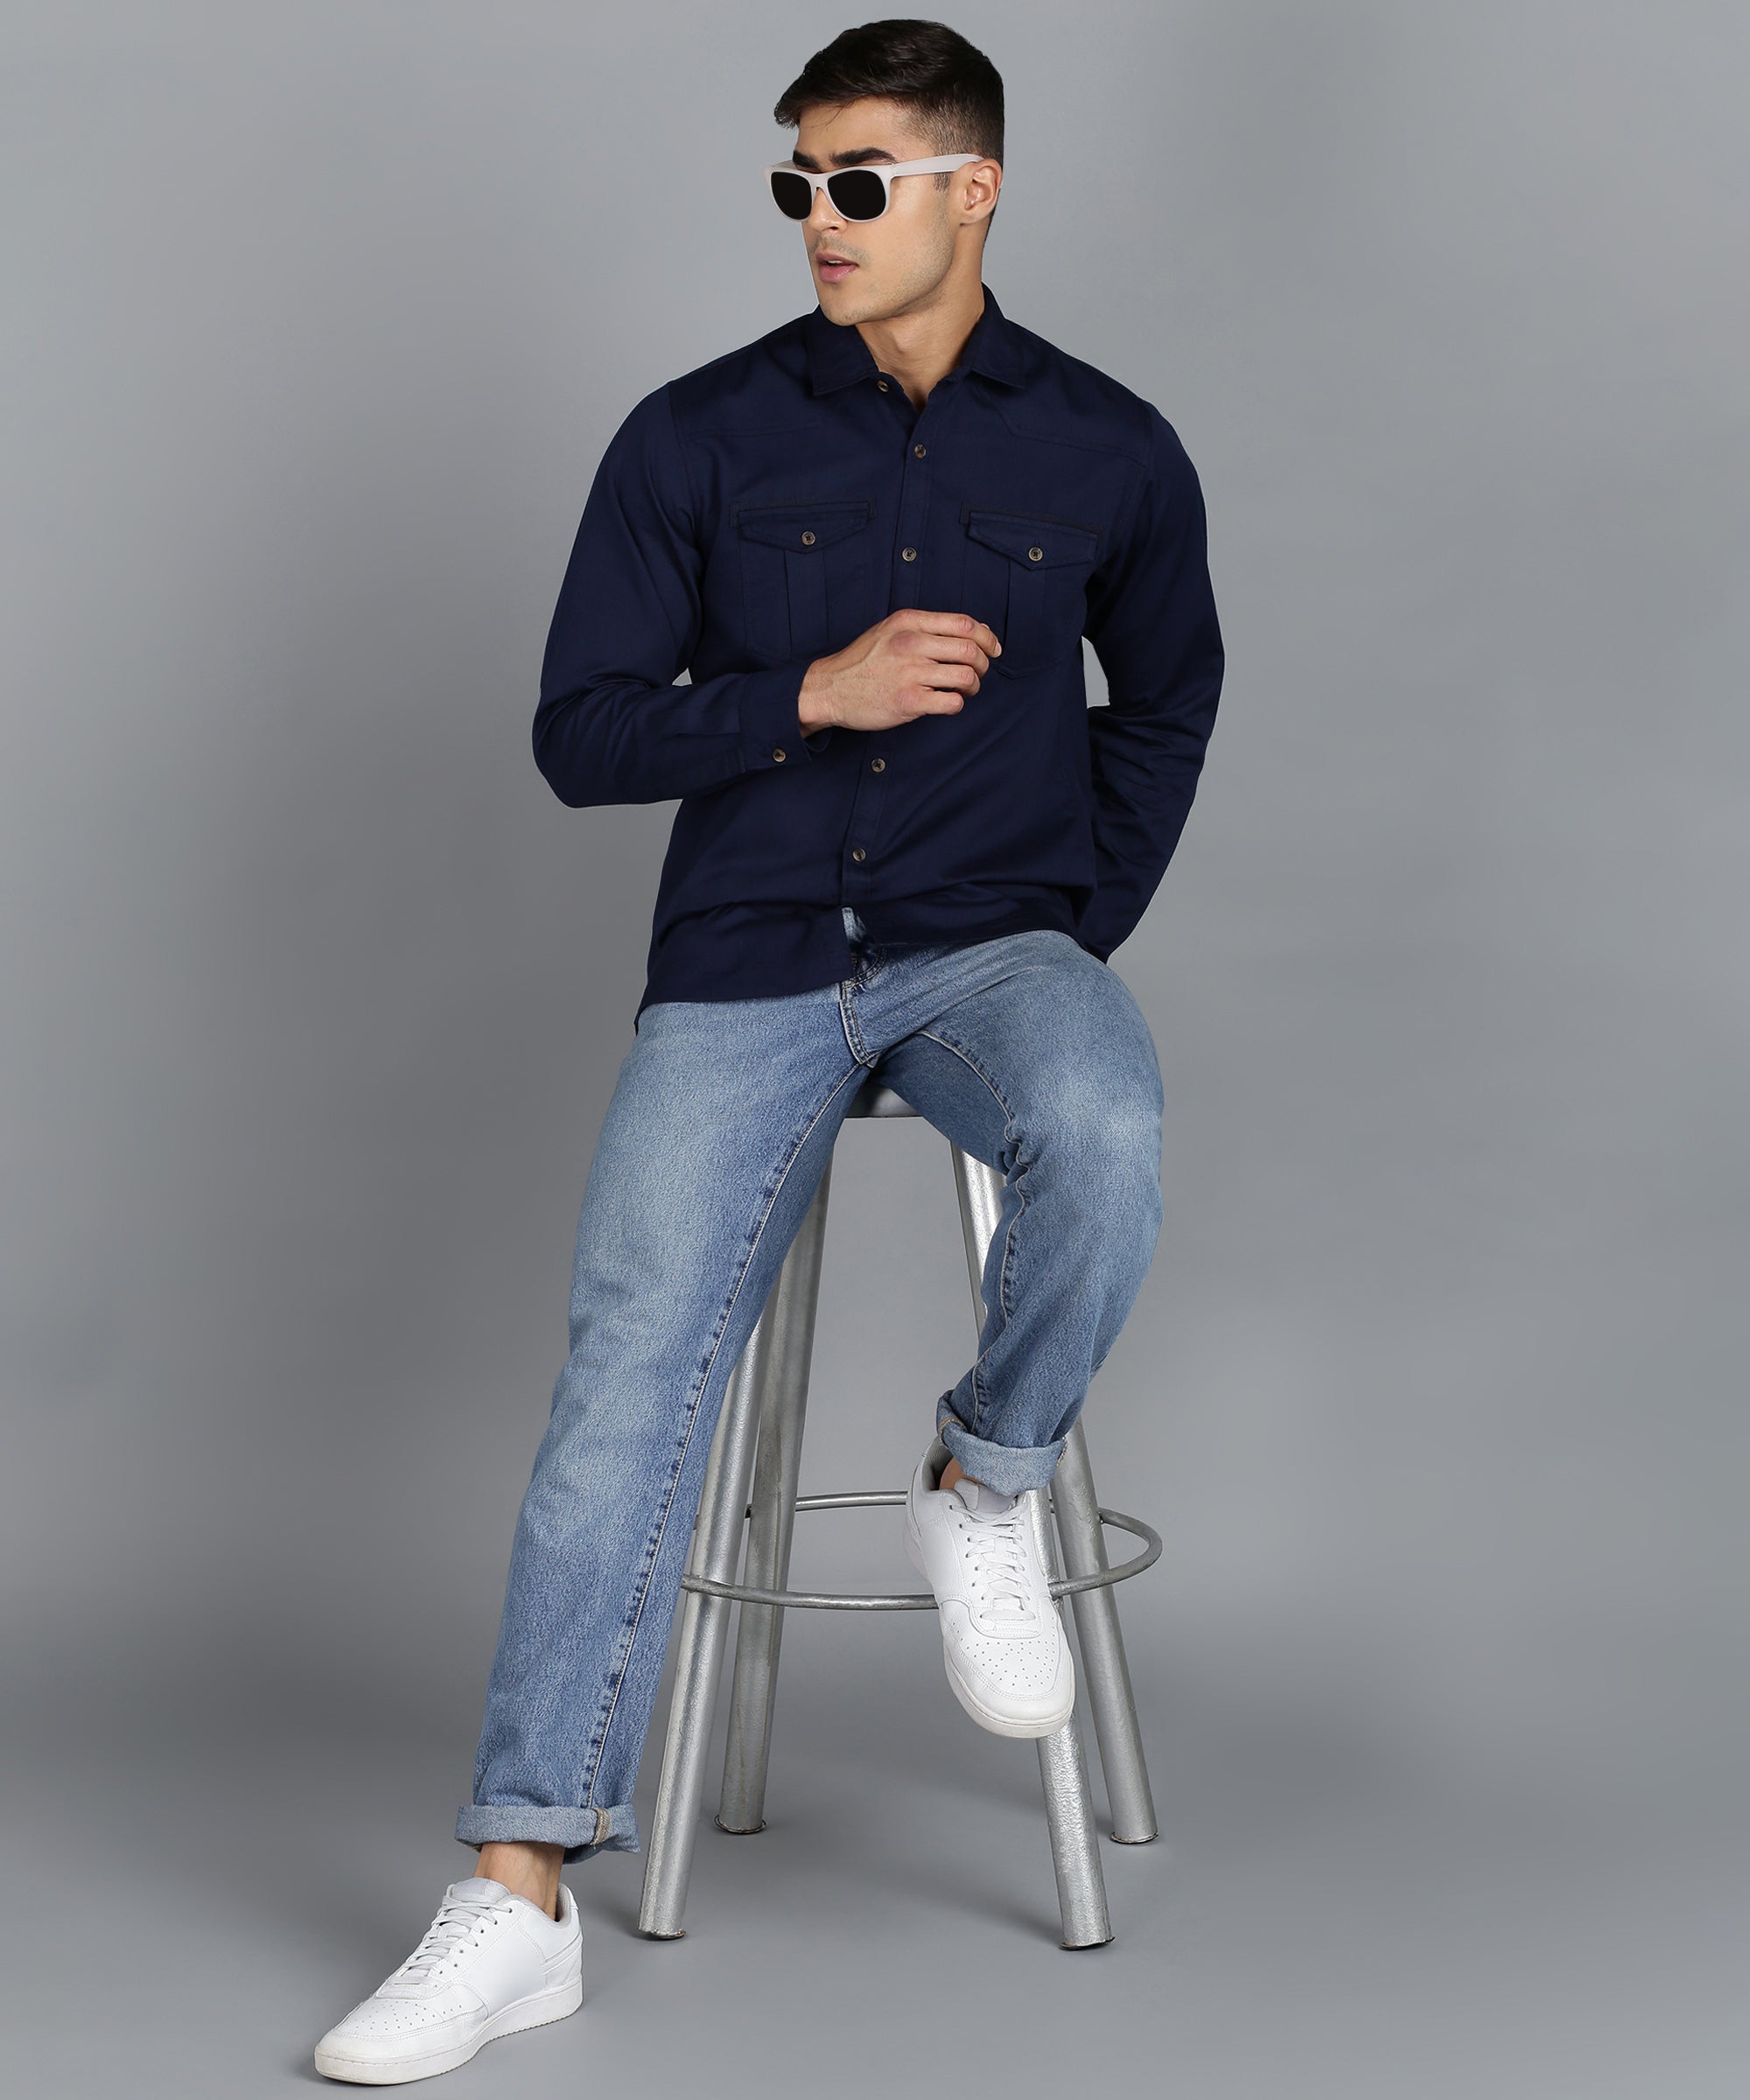 Urbano Fashion Men's Navy Blue Cotton Full Sleeve Slim Fit Casual Solid Shirt